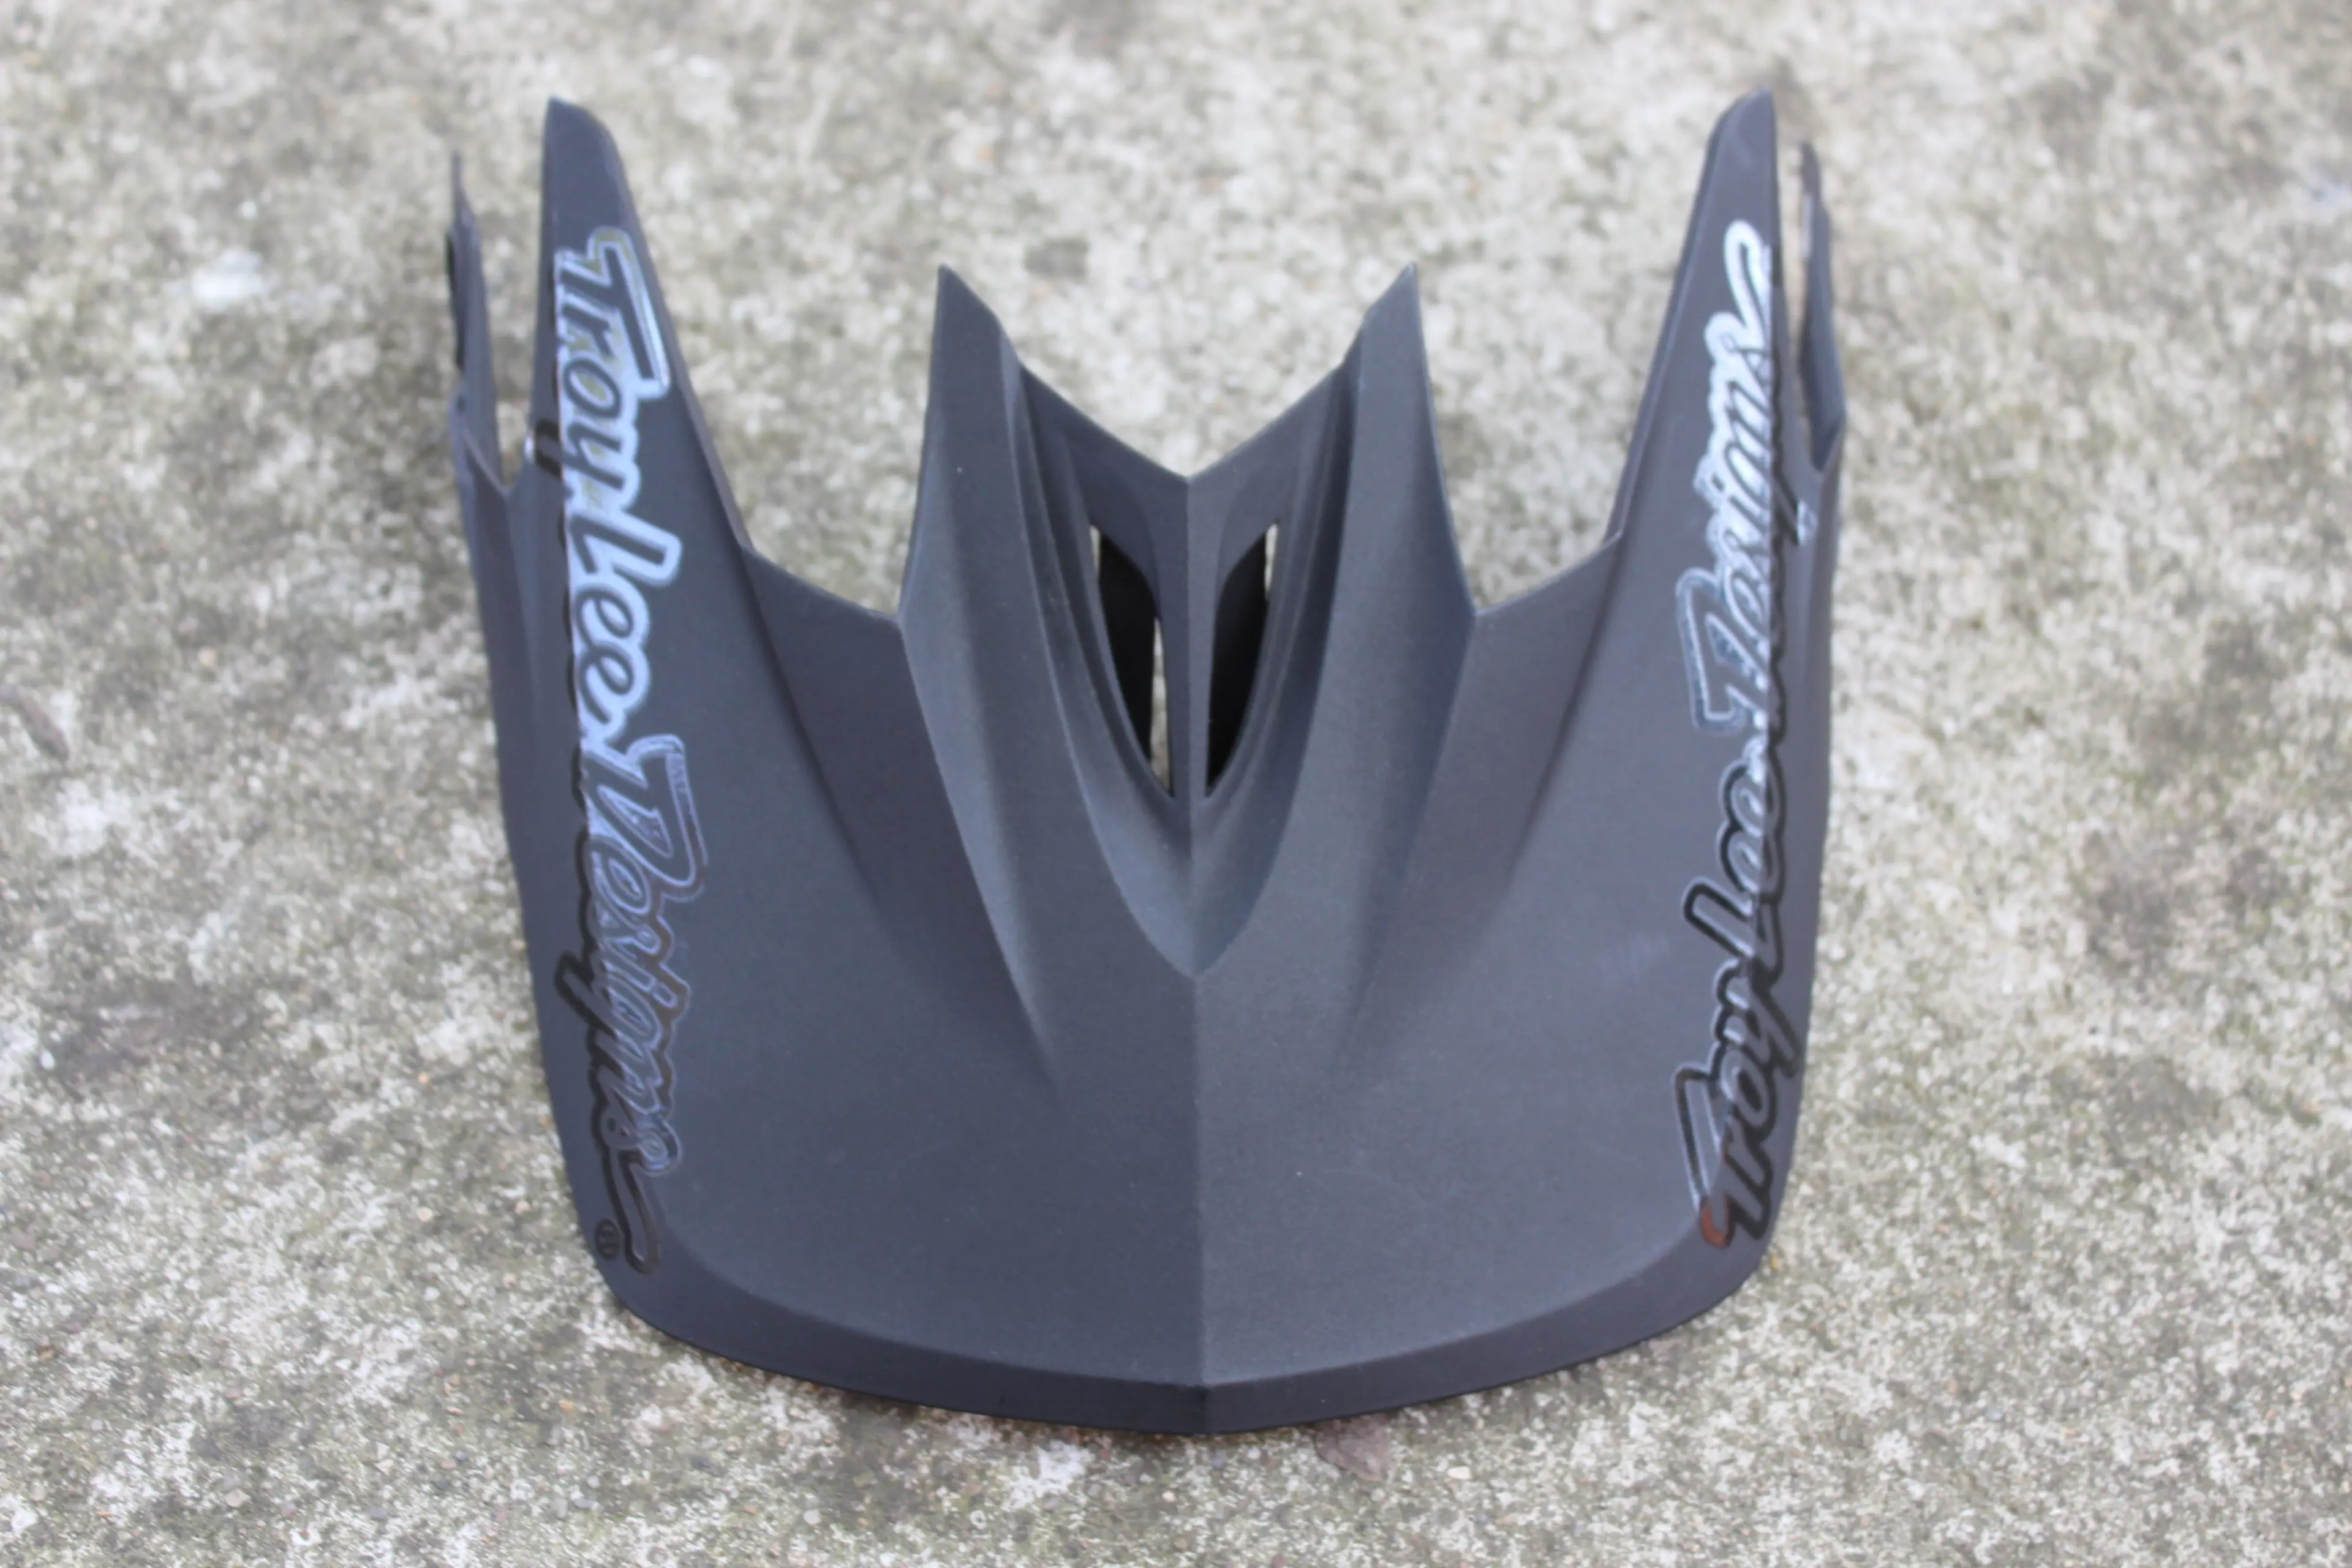 3. Troy Lee Design's D3 Mono Black visor